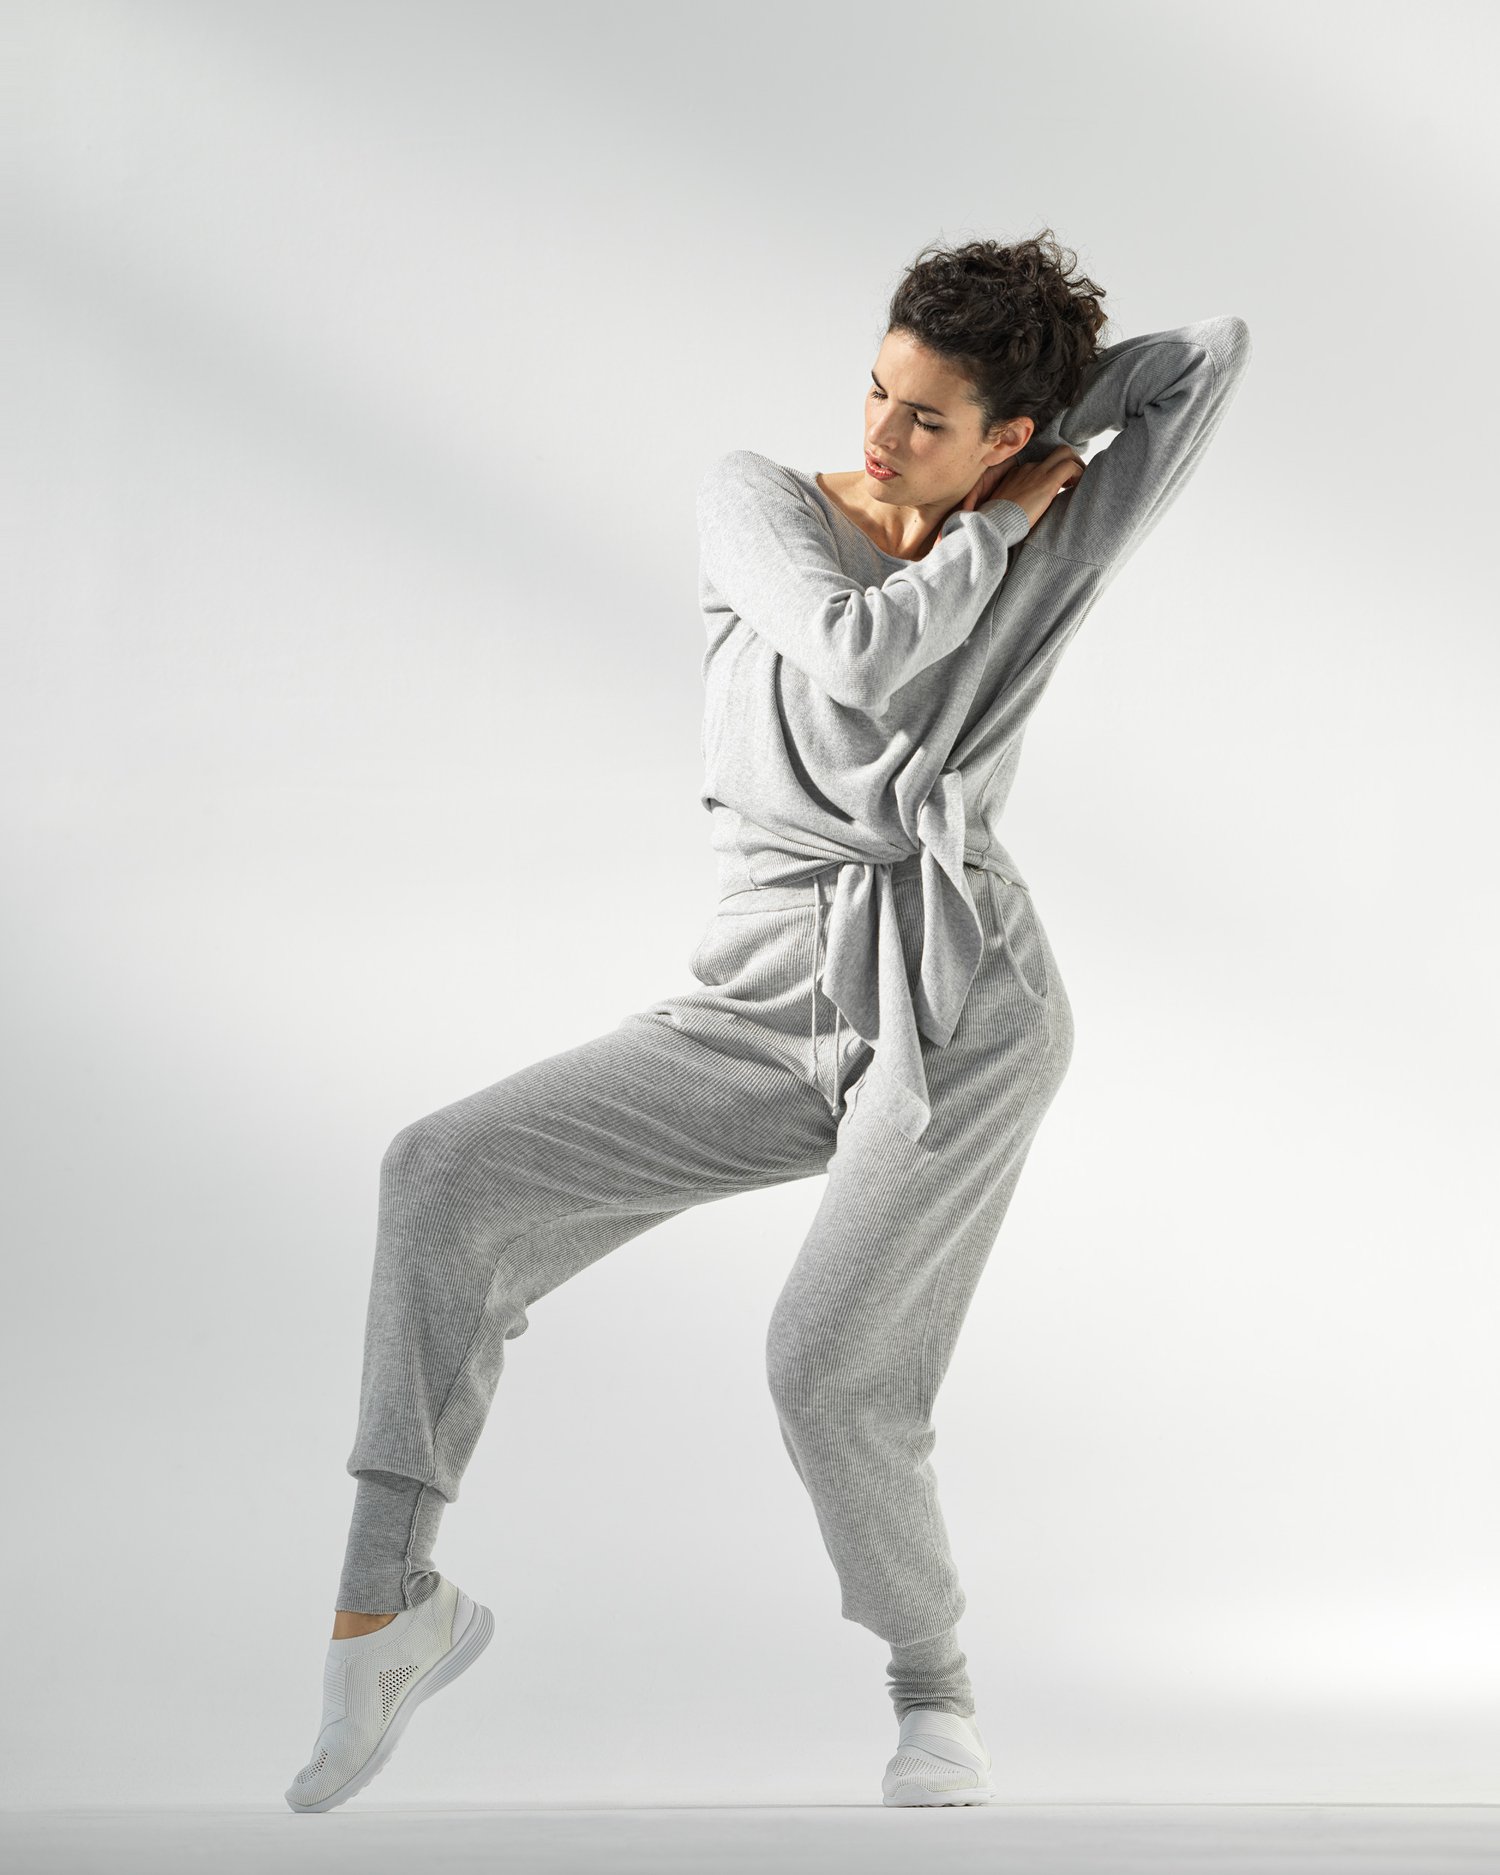 【Athleisure Line: Movement】 Repetto經典Wrap-over上衣和熱身針織長褲，使用舒適的針織物料，讓妳活動自如。